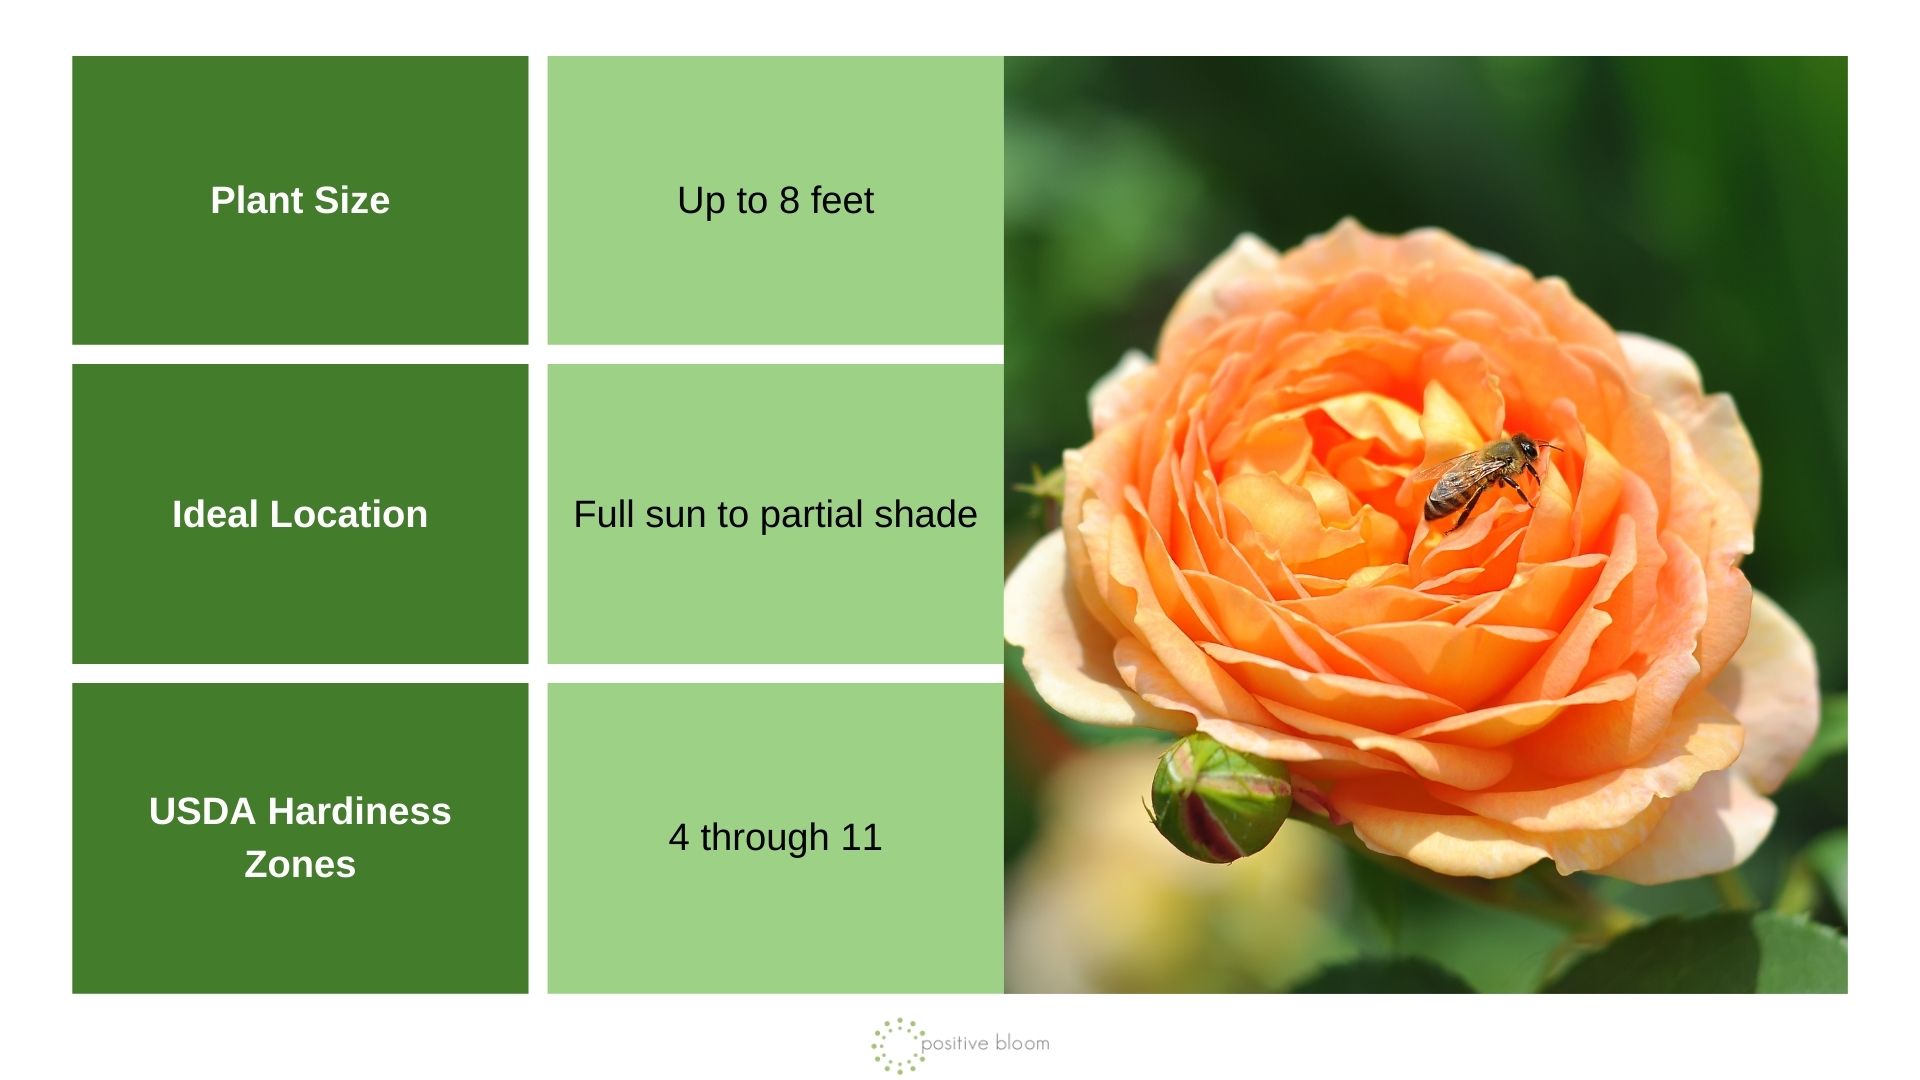 Lady Of Shalott rose info chart and photo